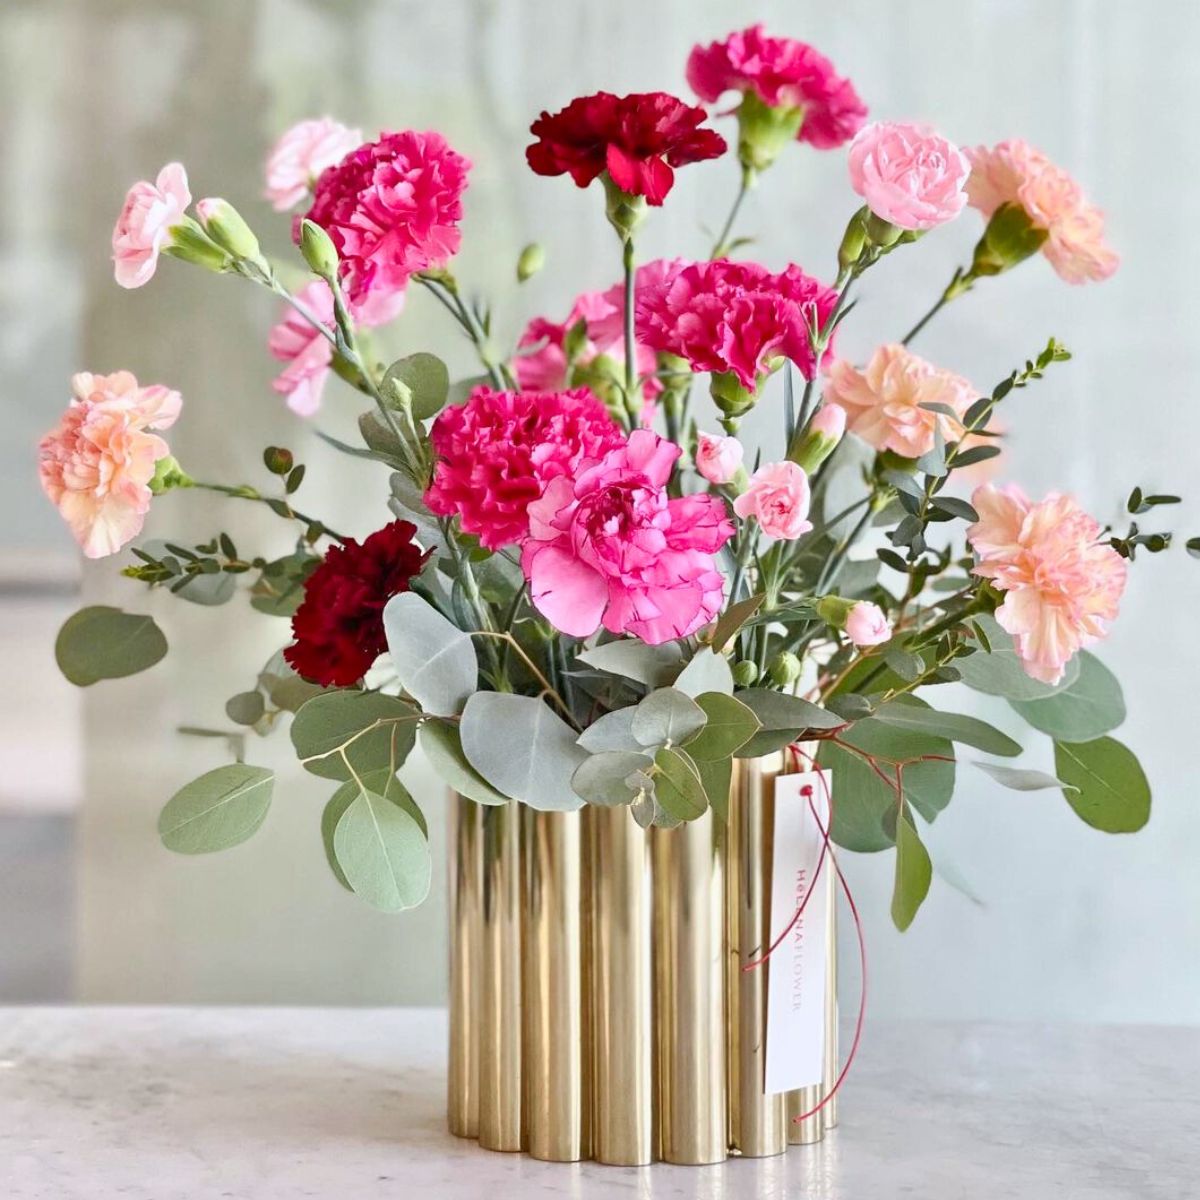 The perfect carnation arrangement for a friend